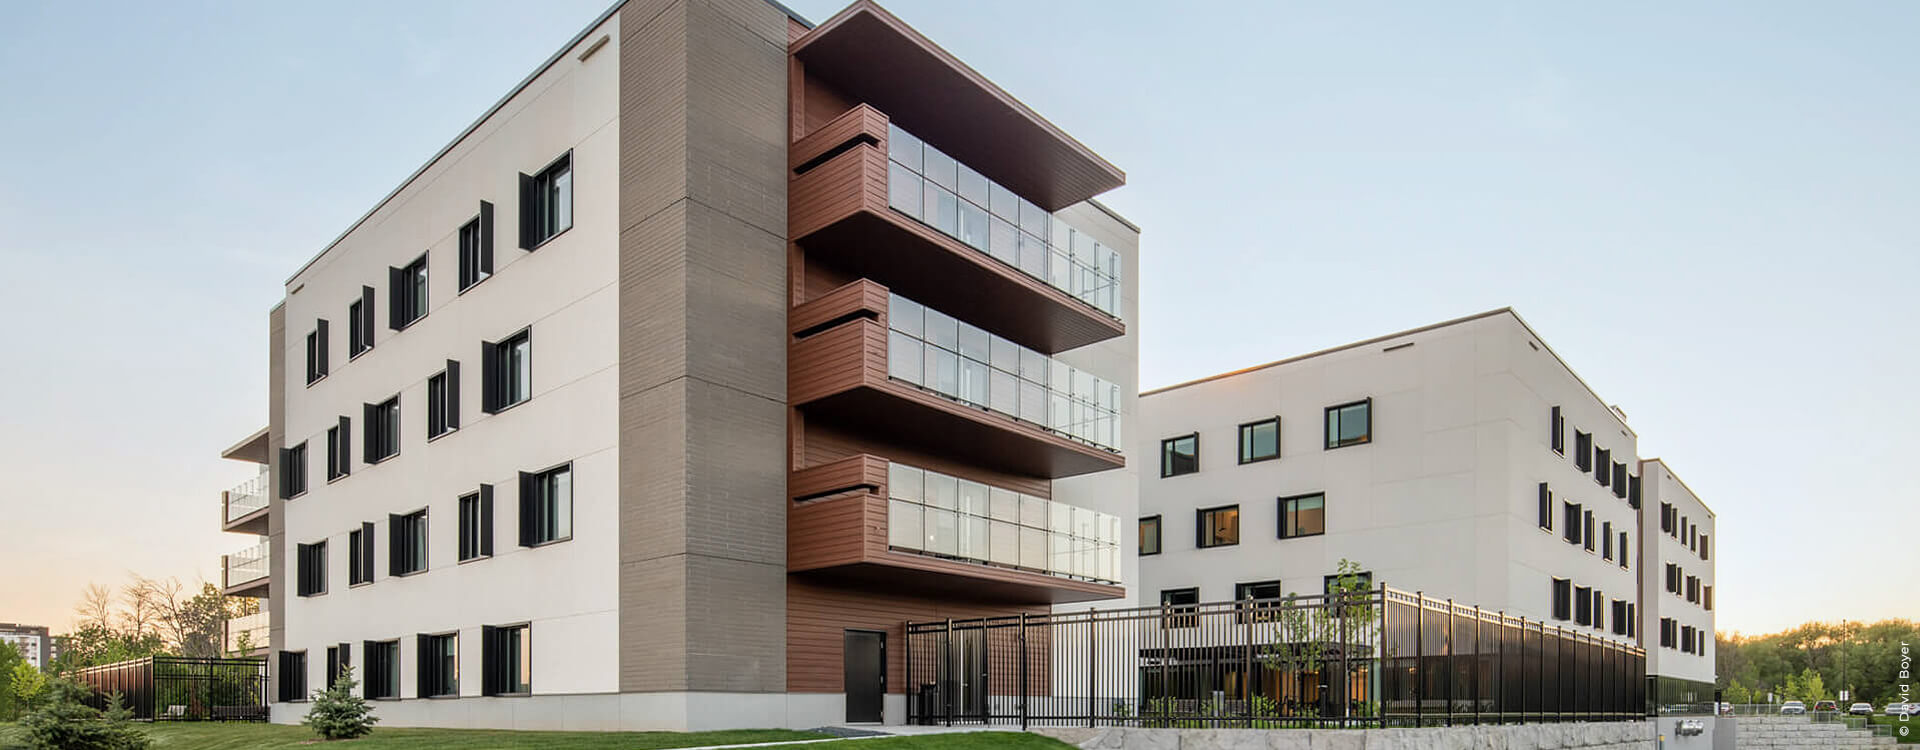 bnr-CHSLD Val-des-Brises-Healthcare building design